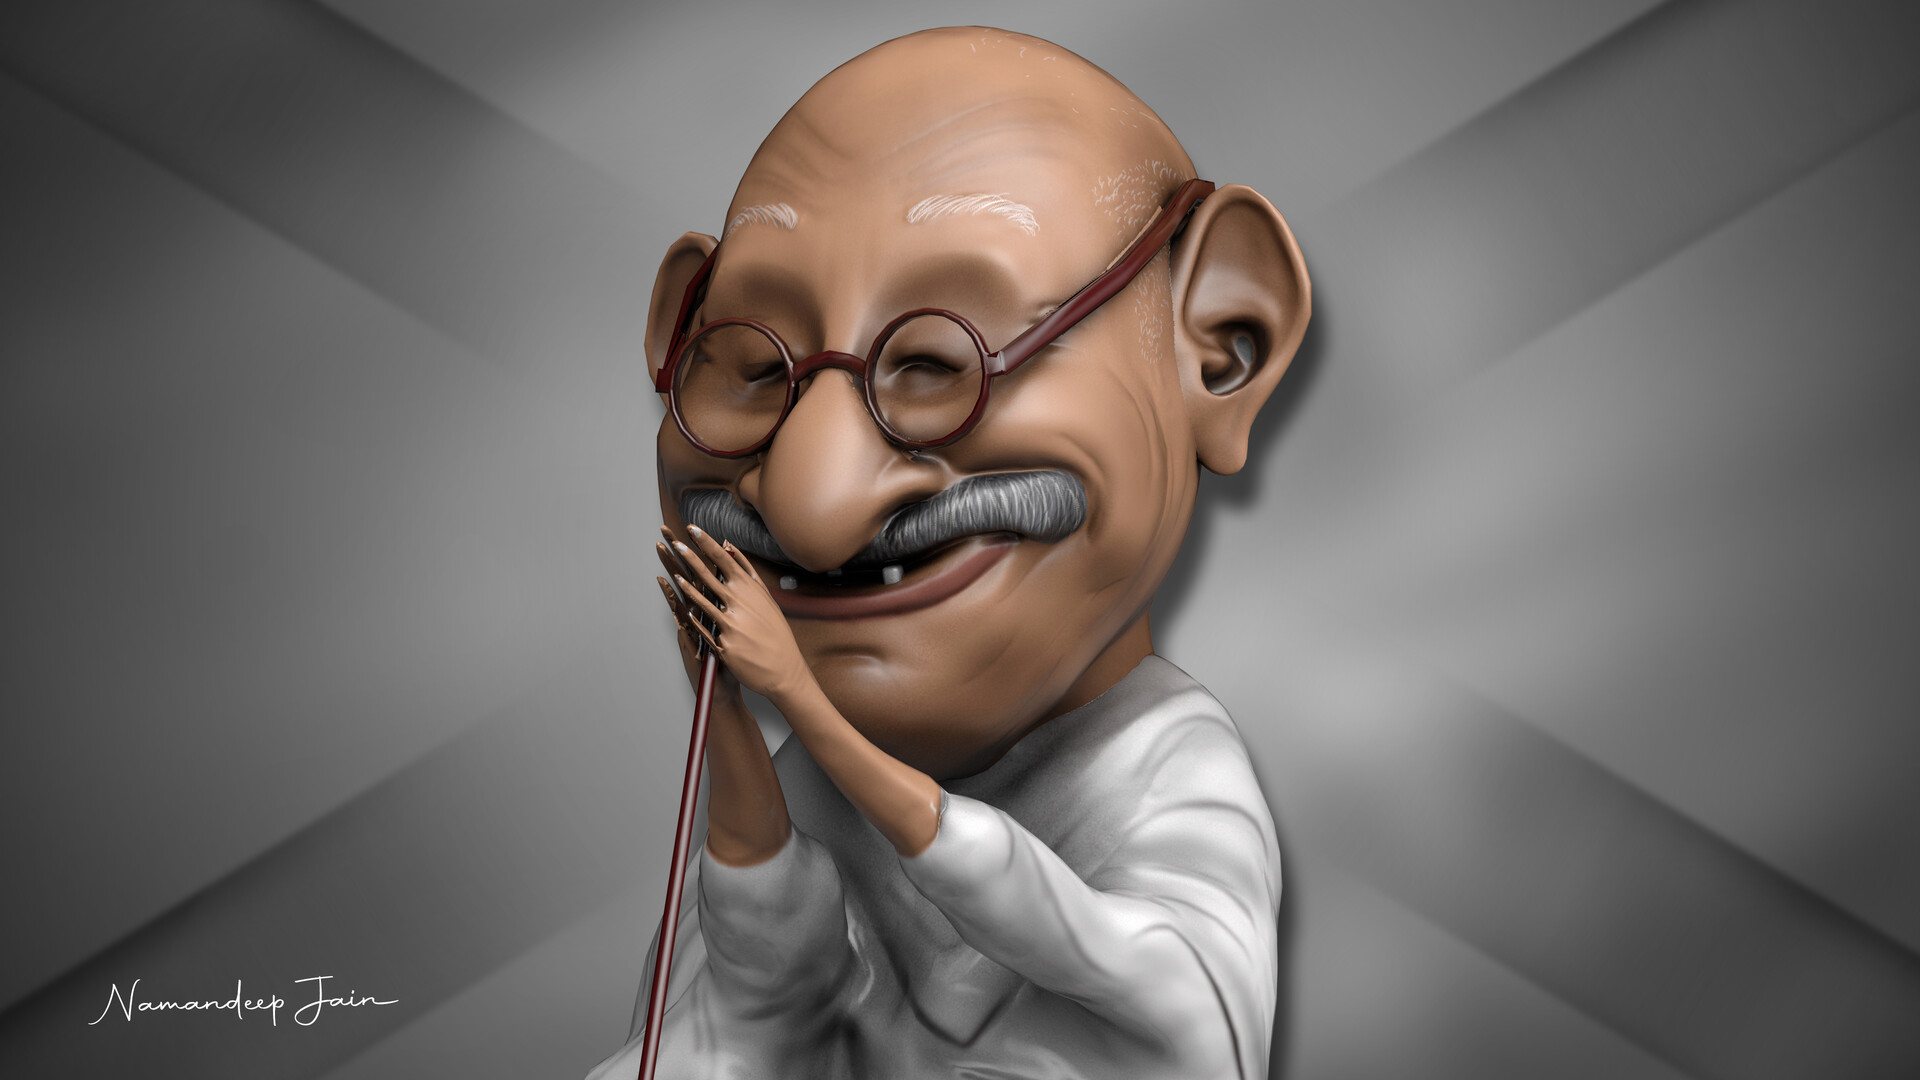 ArtStation - 3D caricature of Mahatma Gandhi